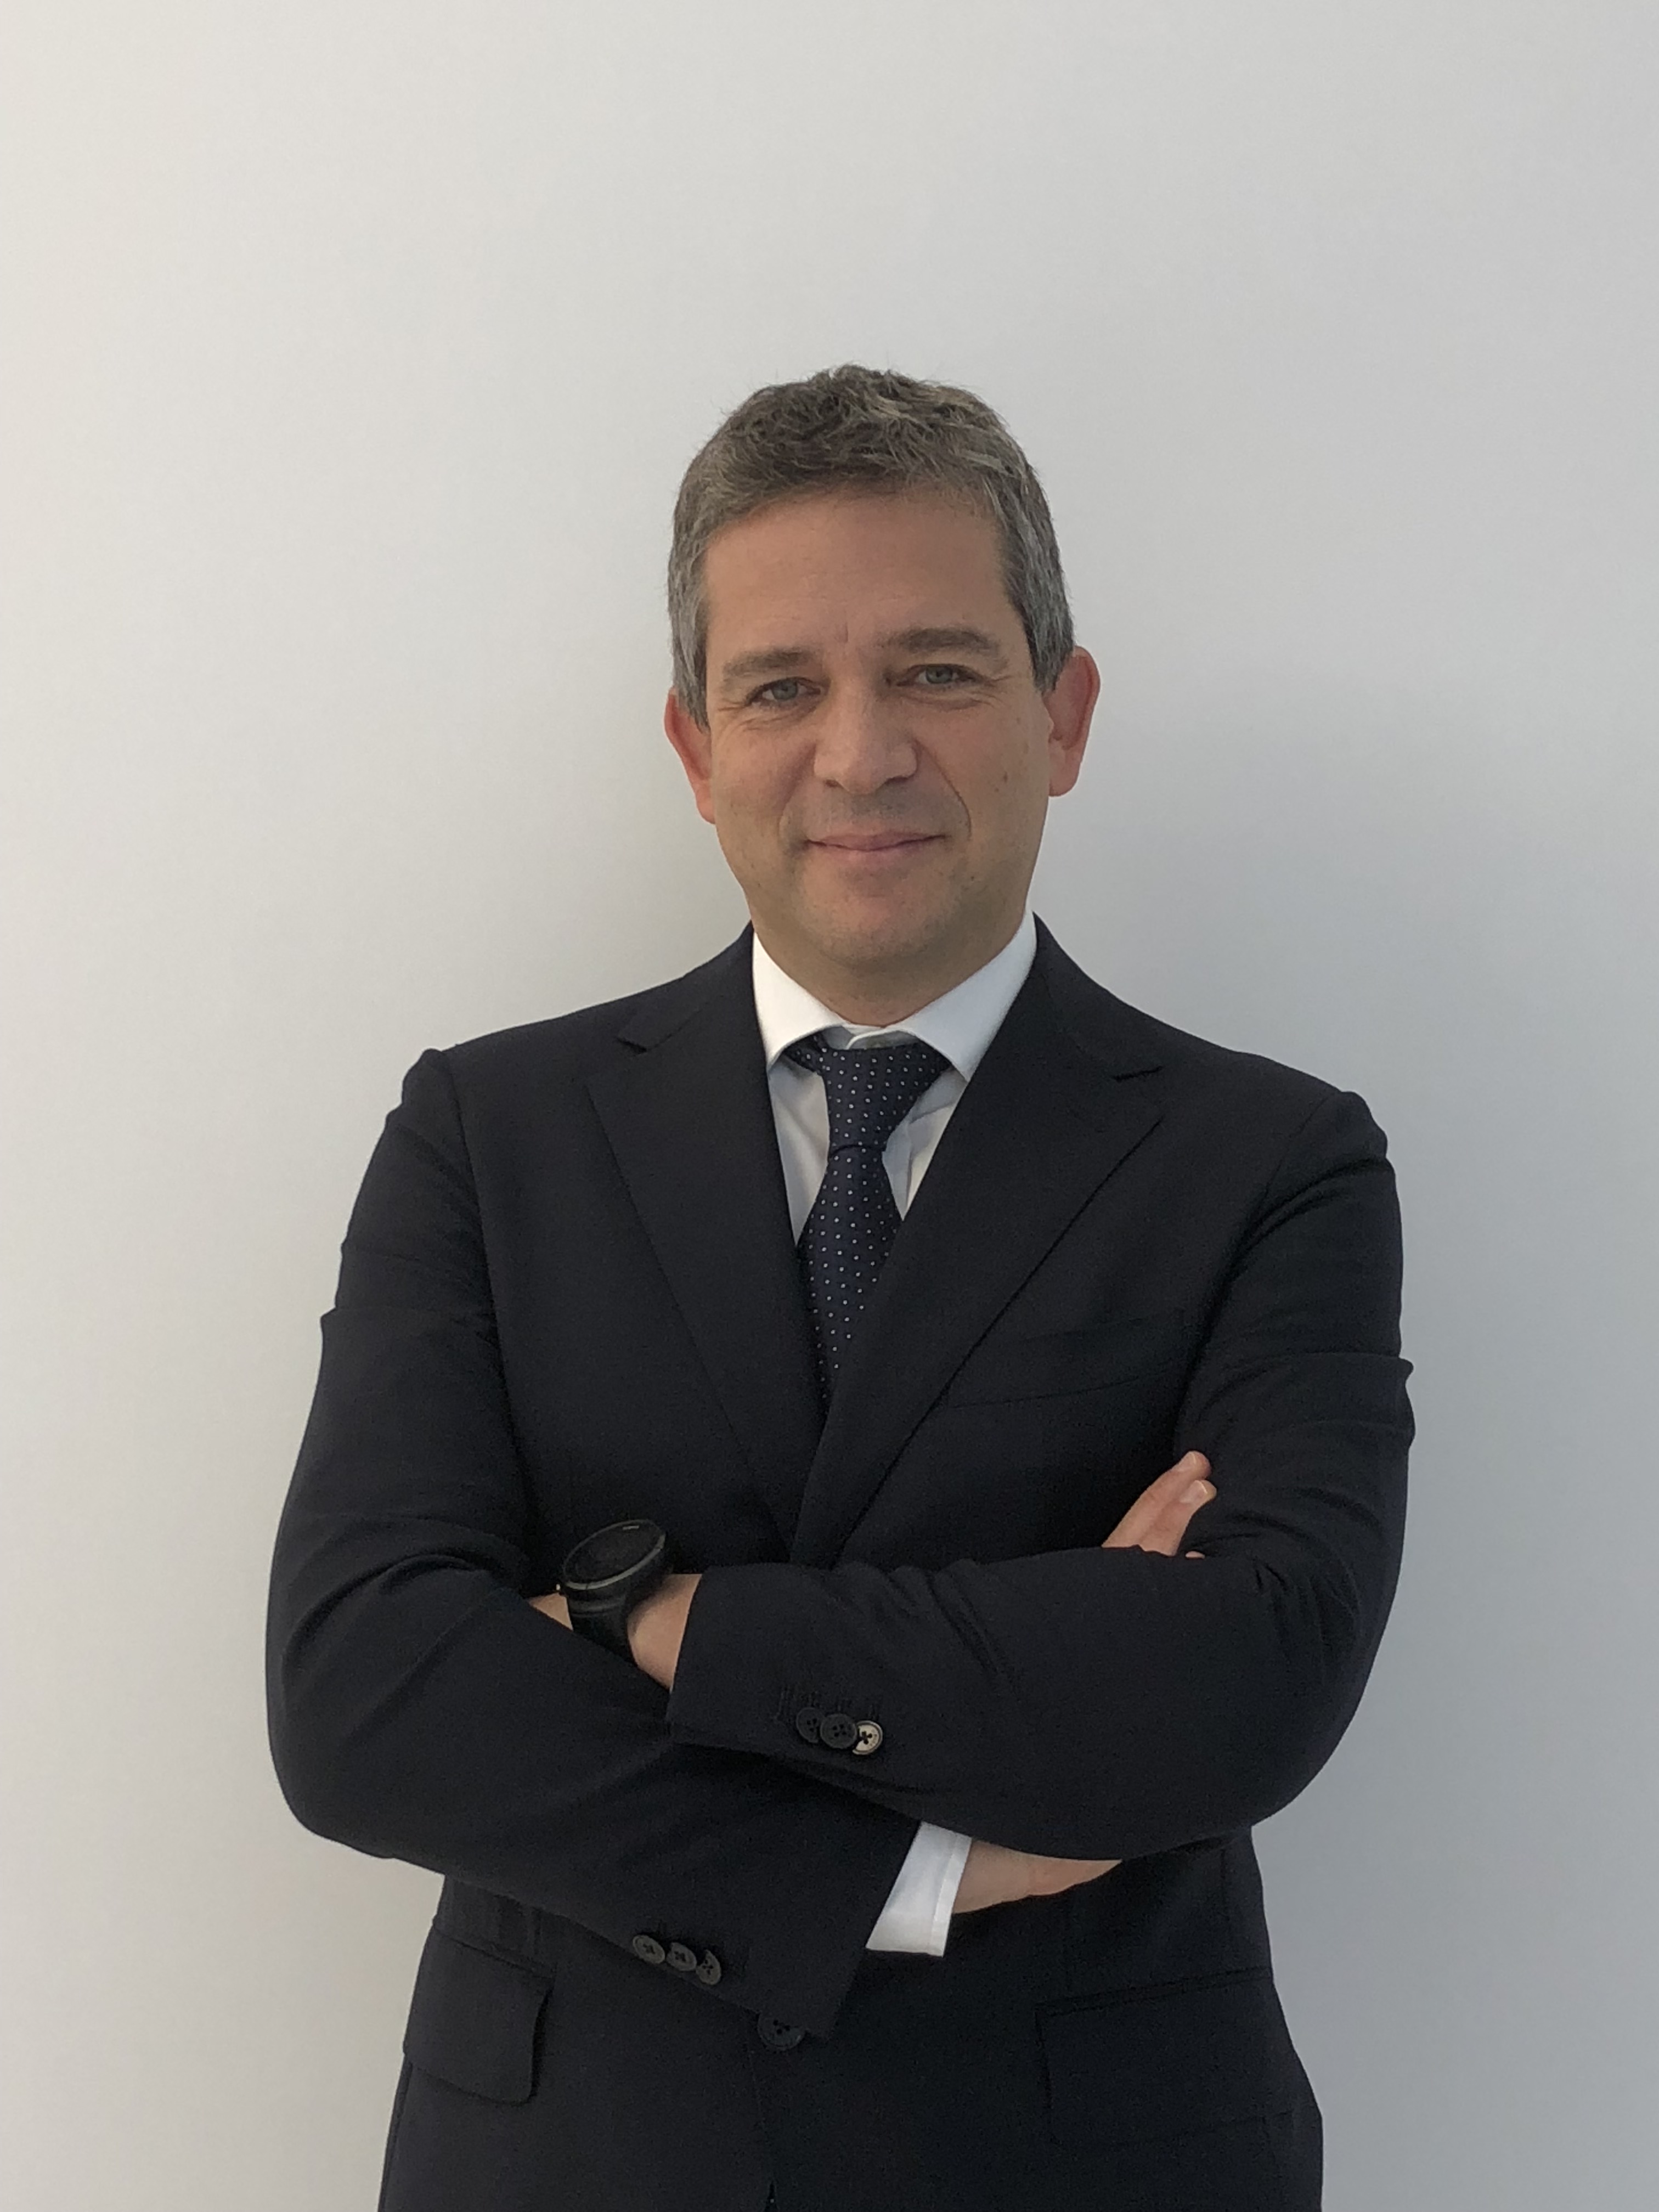 Marzio Albonico, Head of Family Protection & Planning at Banca Generali